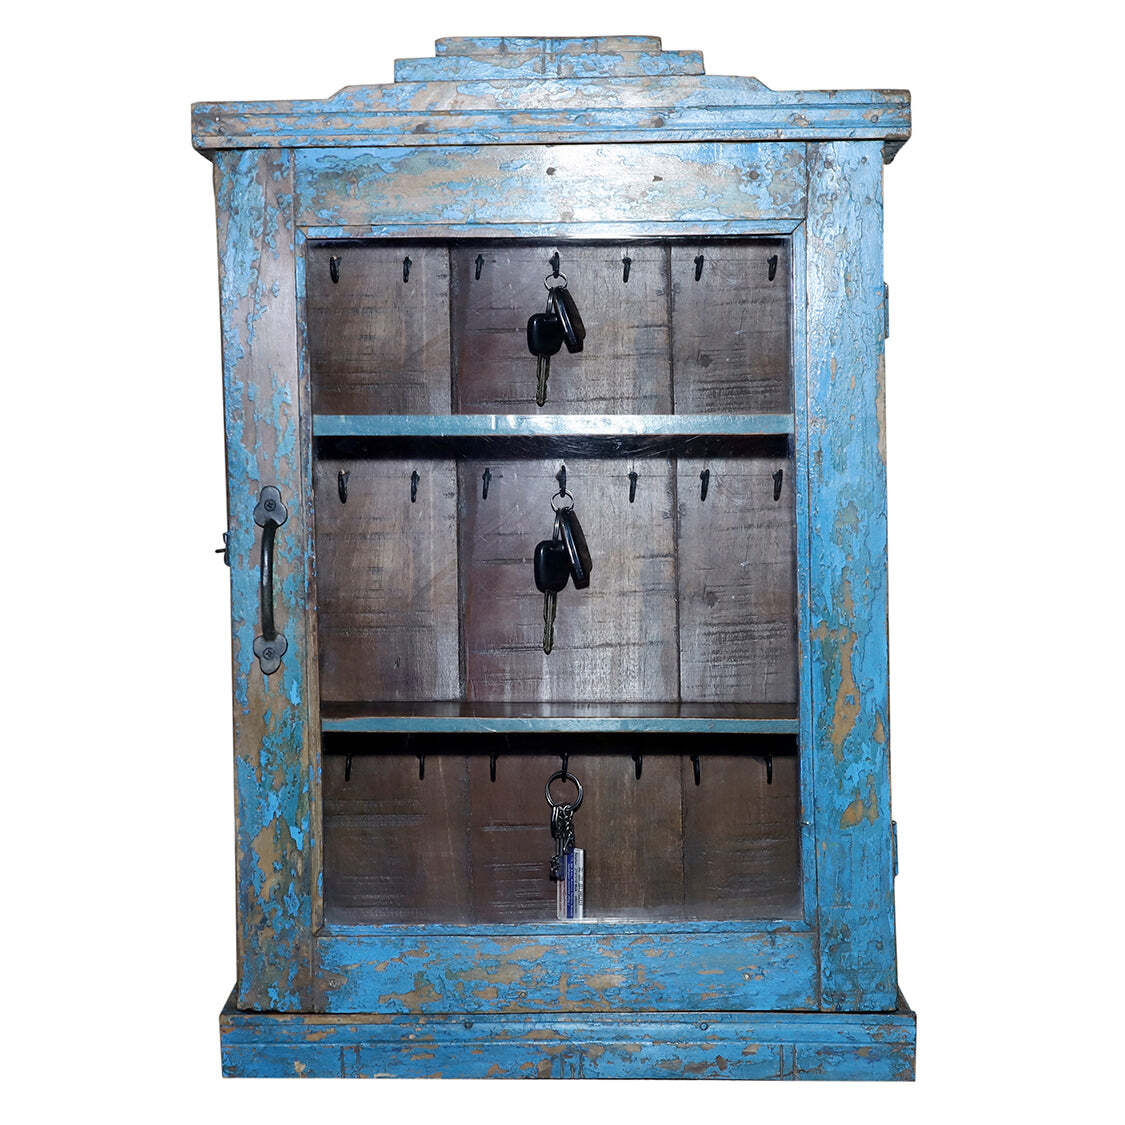 Antique Cabinet with Hooks & Shelves - image 1